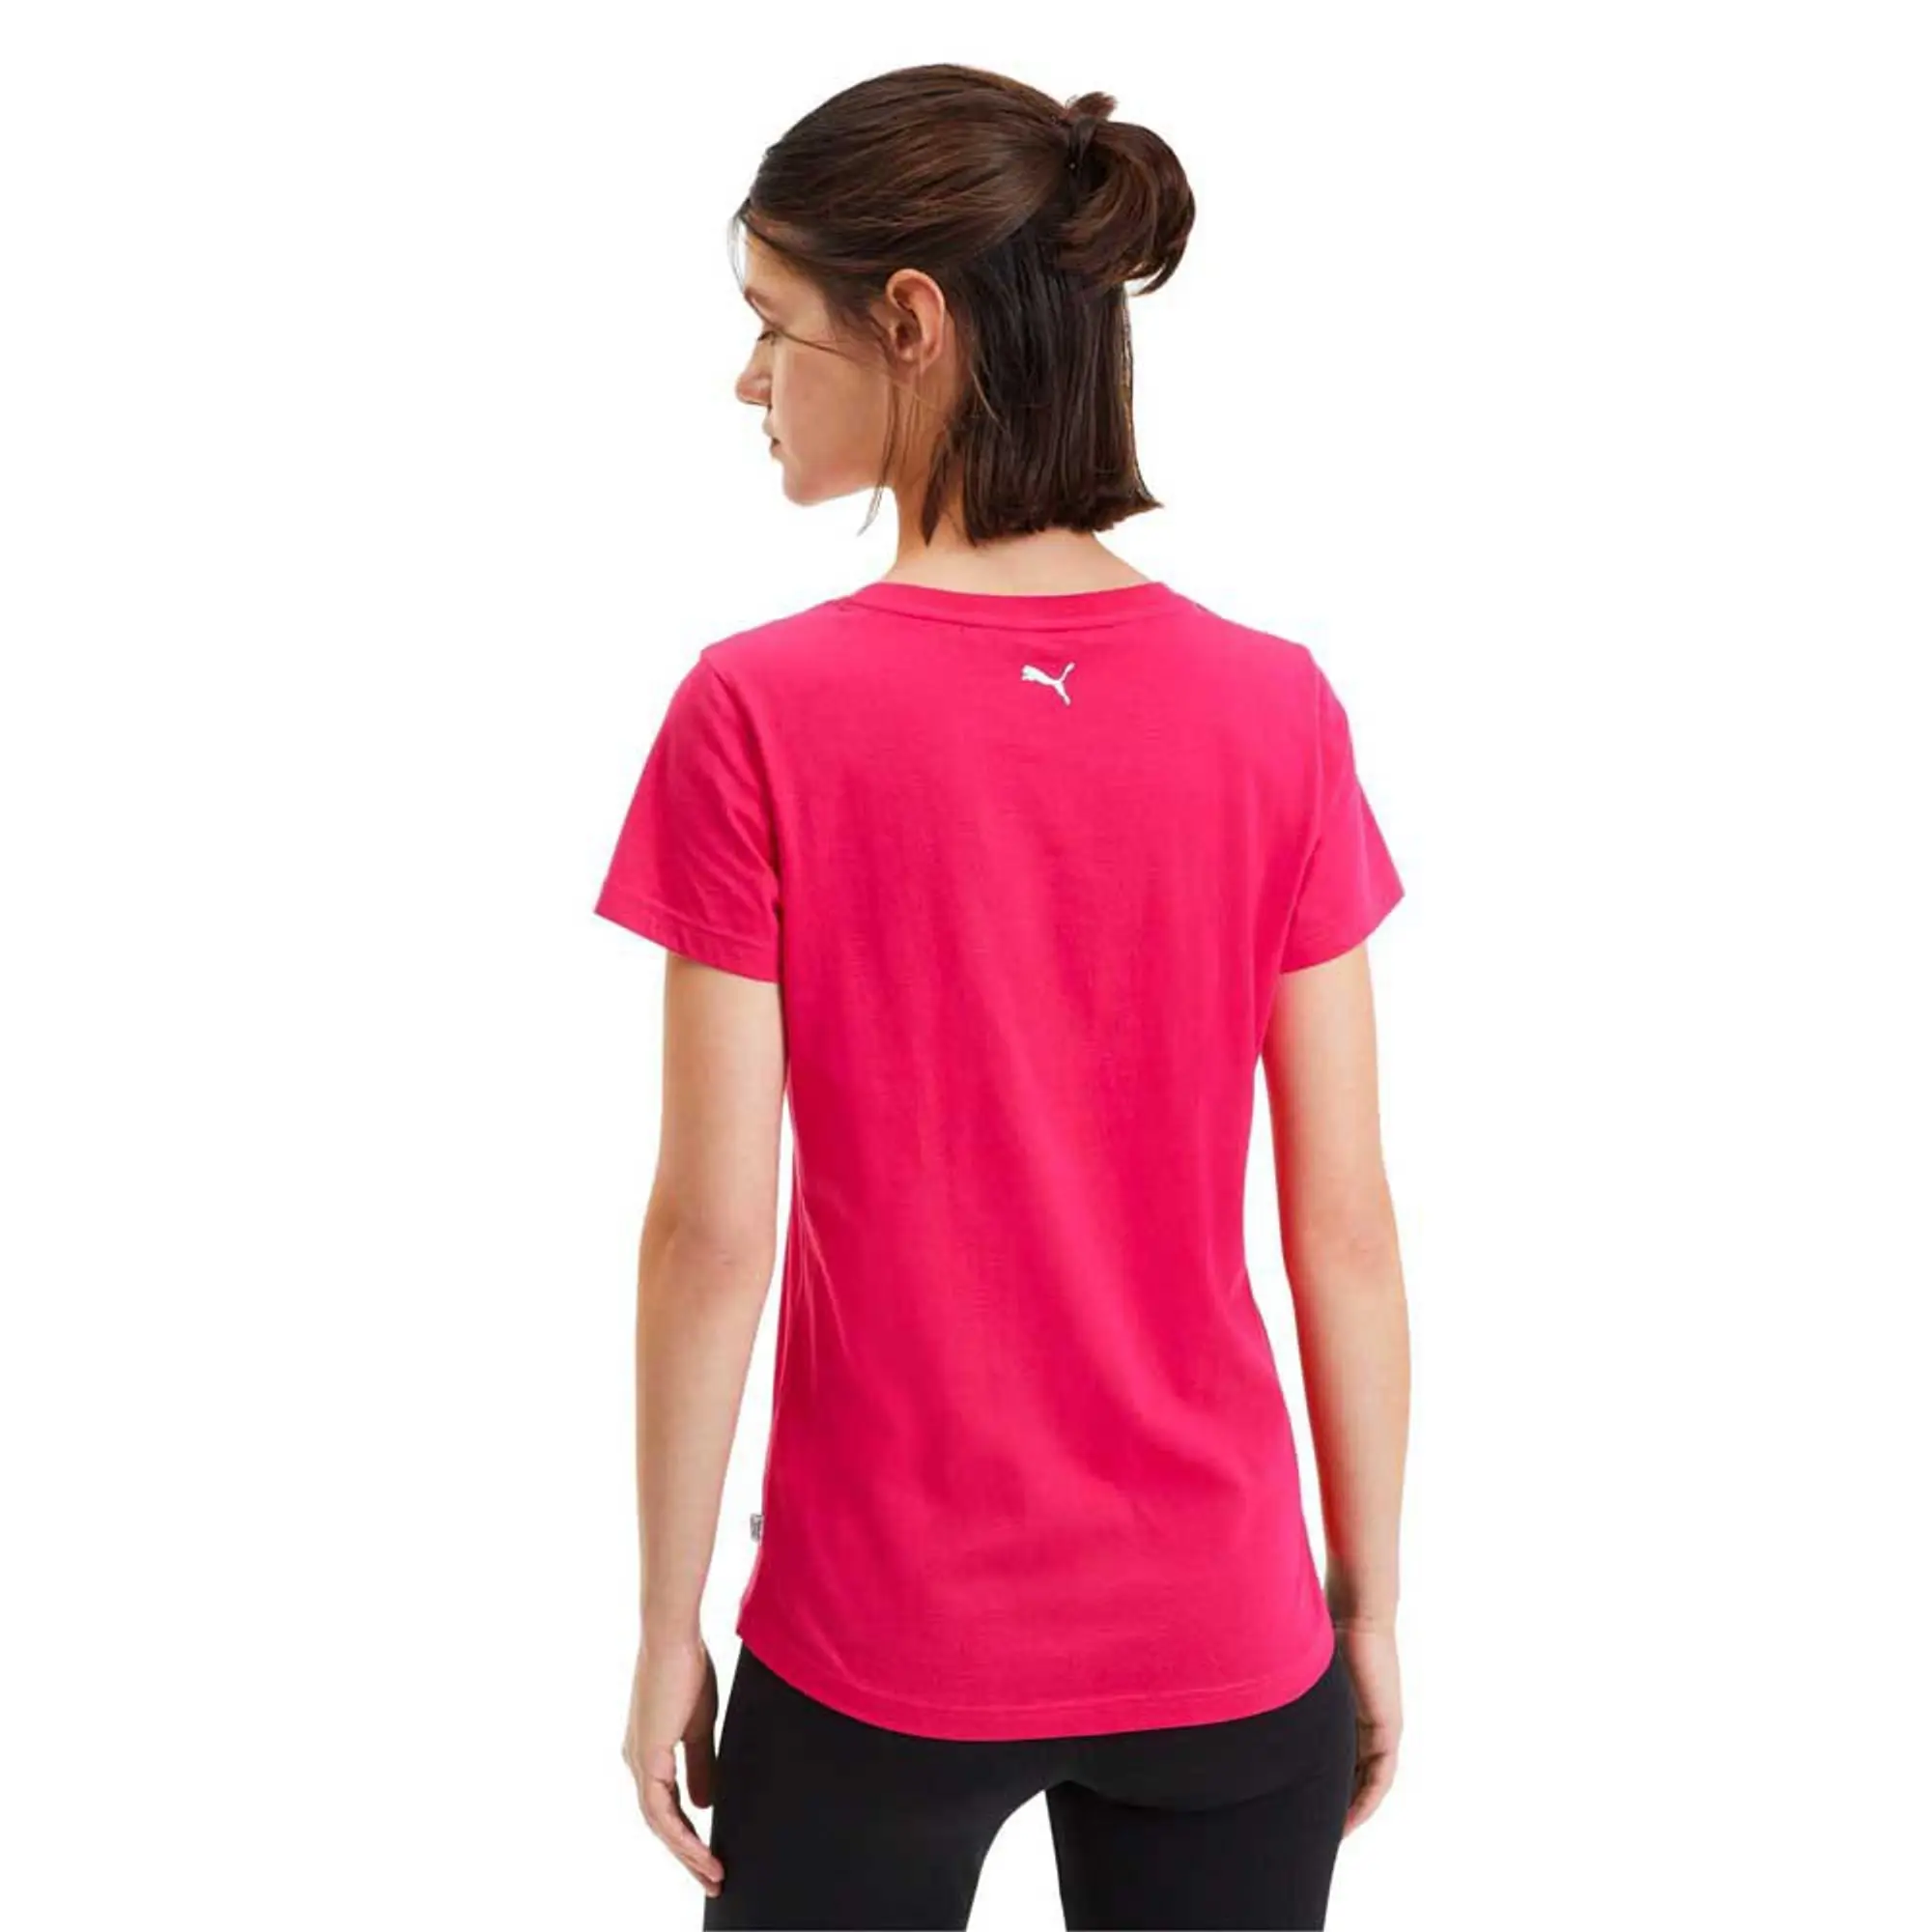 Puma Rebel Graphic Short Sleeve T-shirt  - Pink